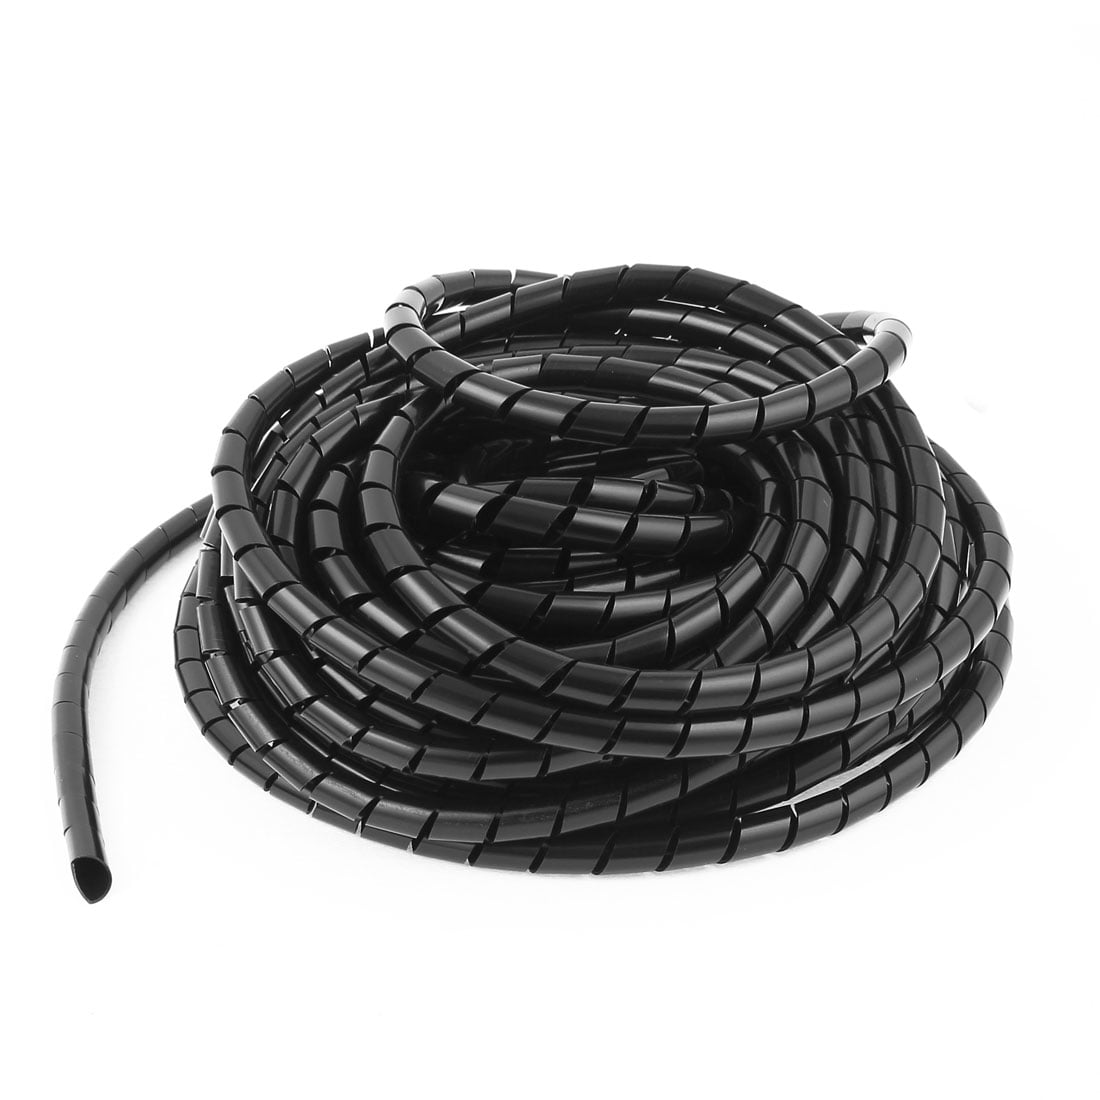 2M Flexible Spiral Wire Wrap Desktop PC Cable Cord Protector 8-16mm Reusable Pre